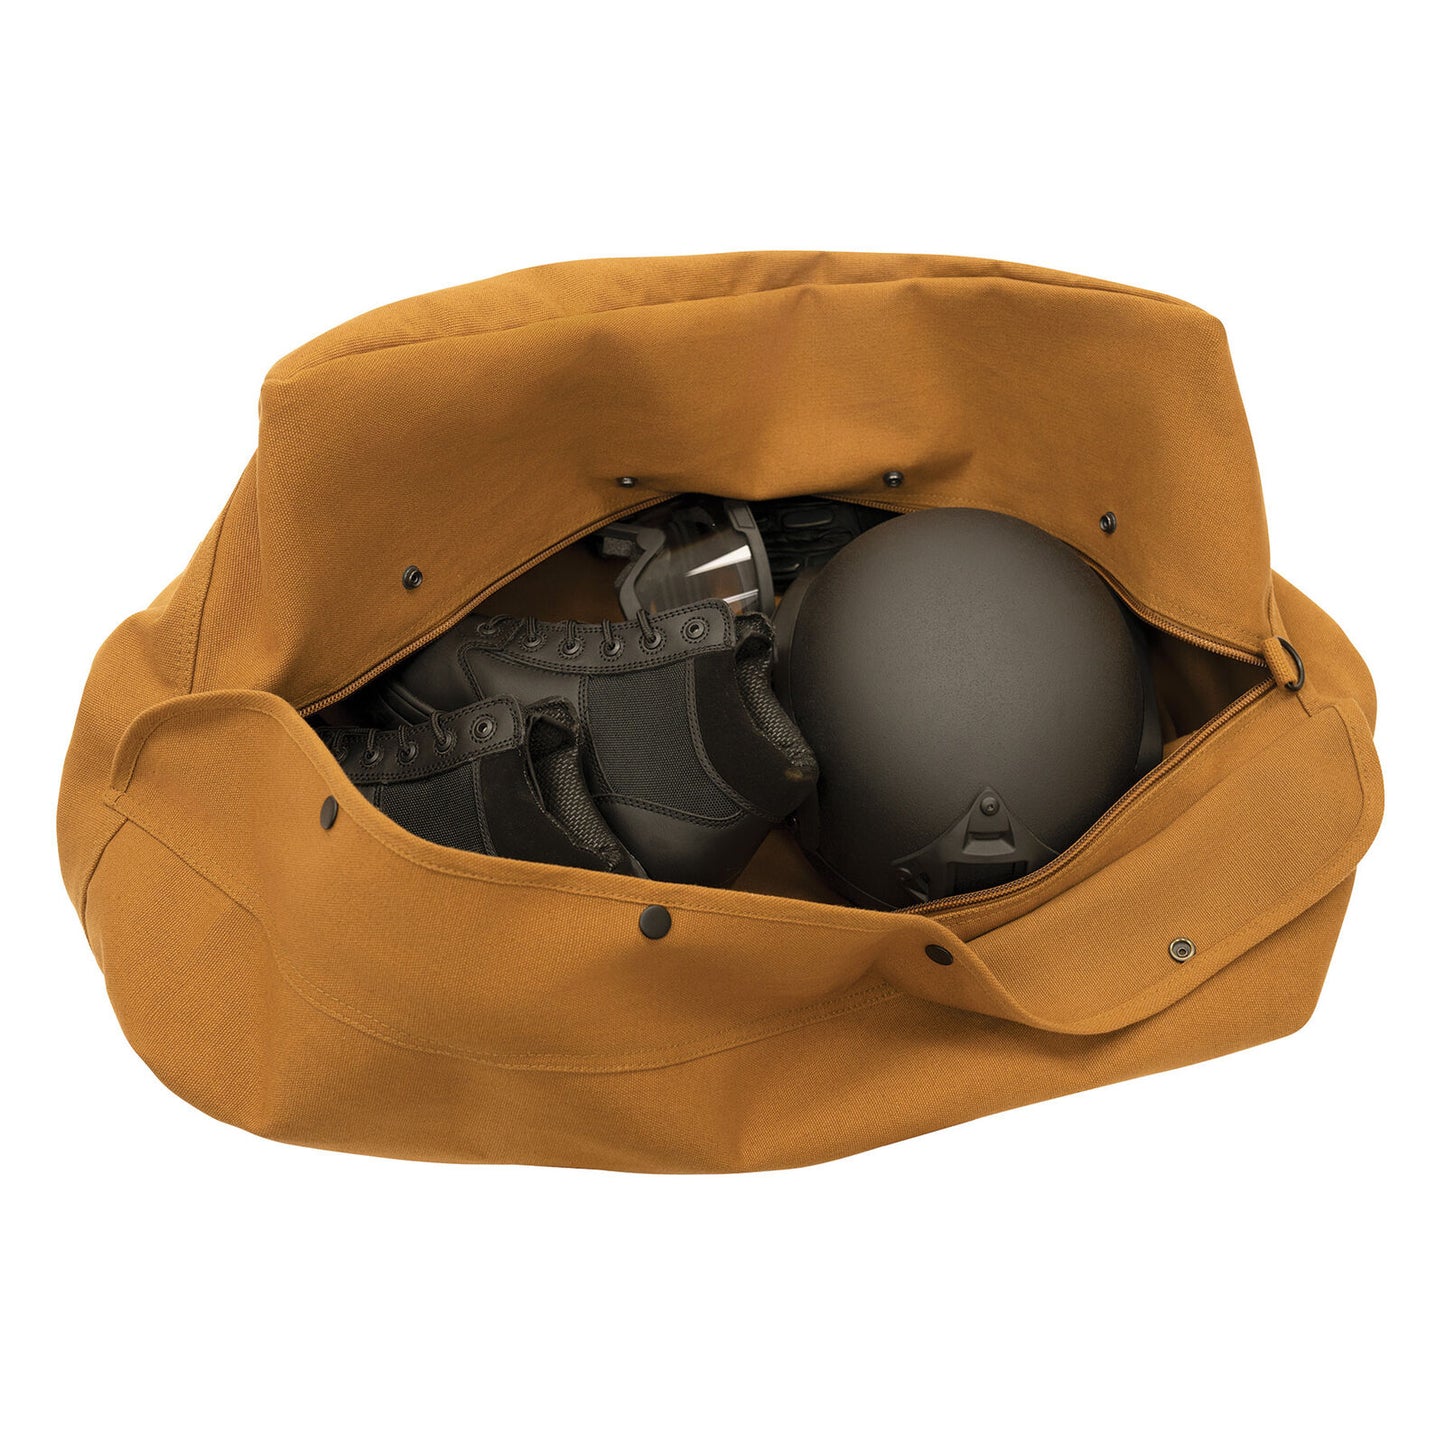 Canvas Parachute Cargo Bag In Work Brown 24"x15"x13" - Twin Handle Duffle Bag